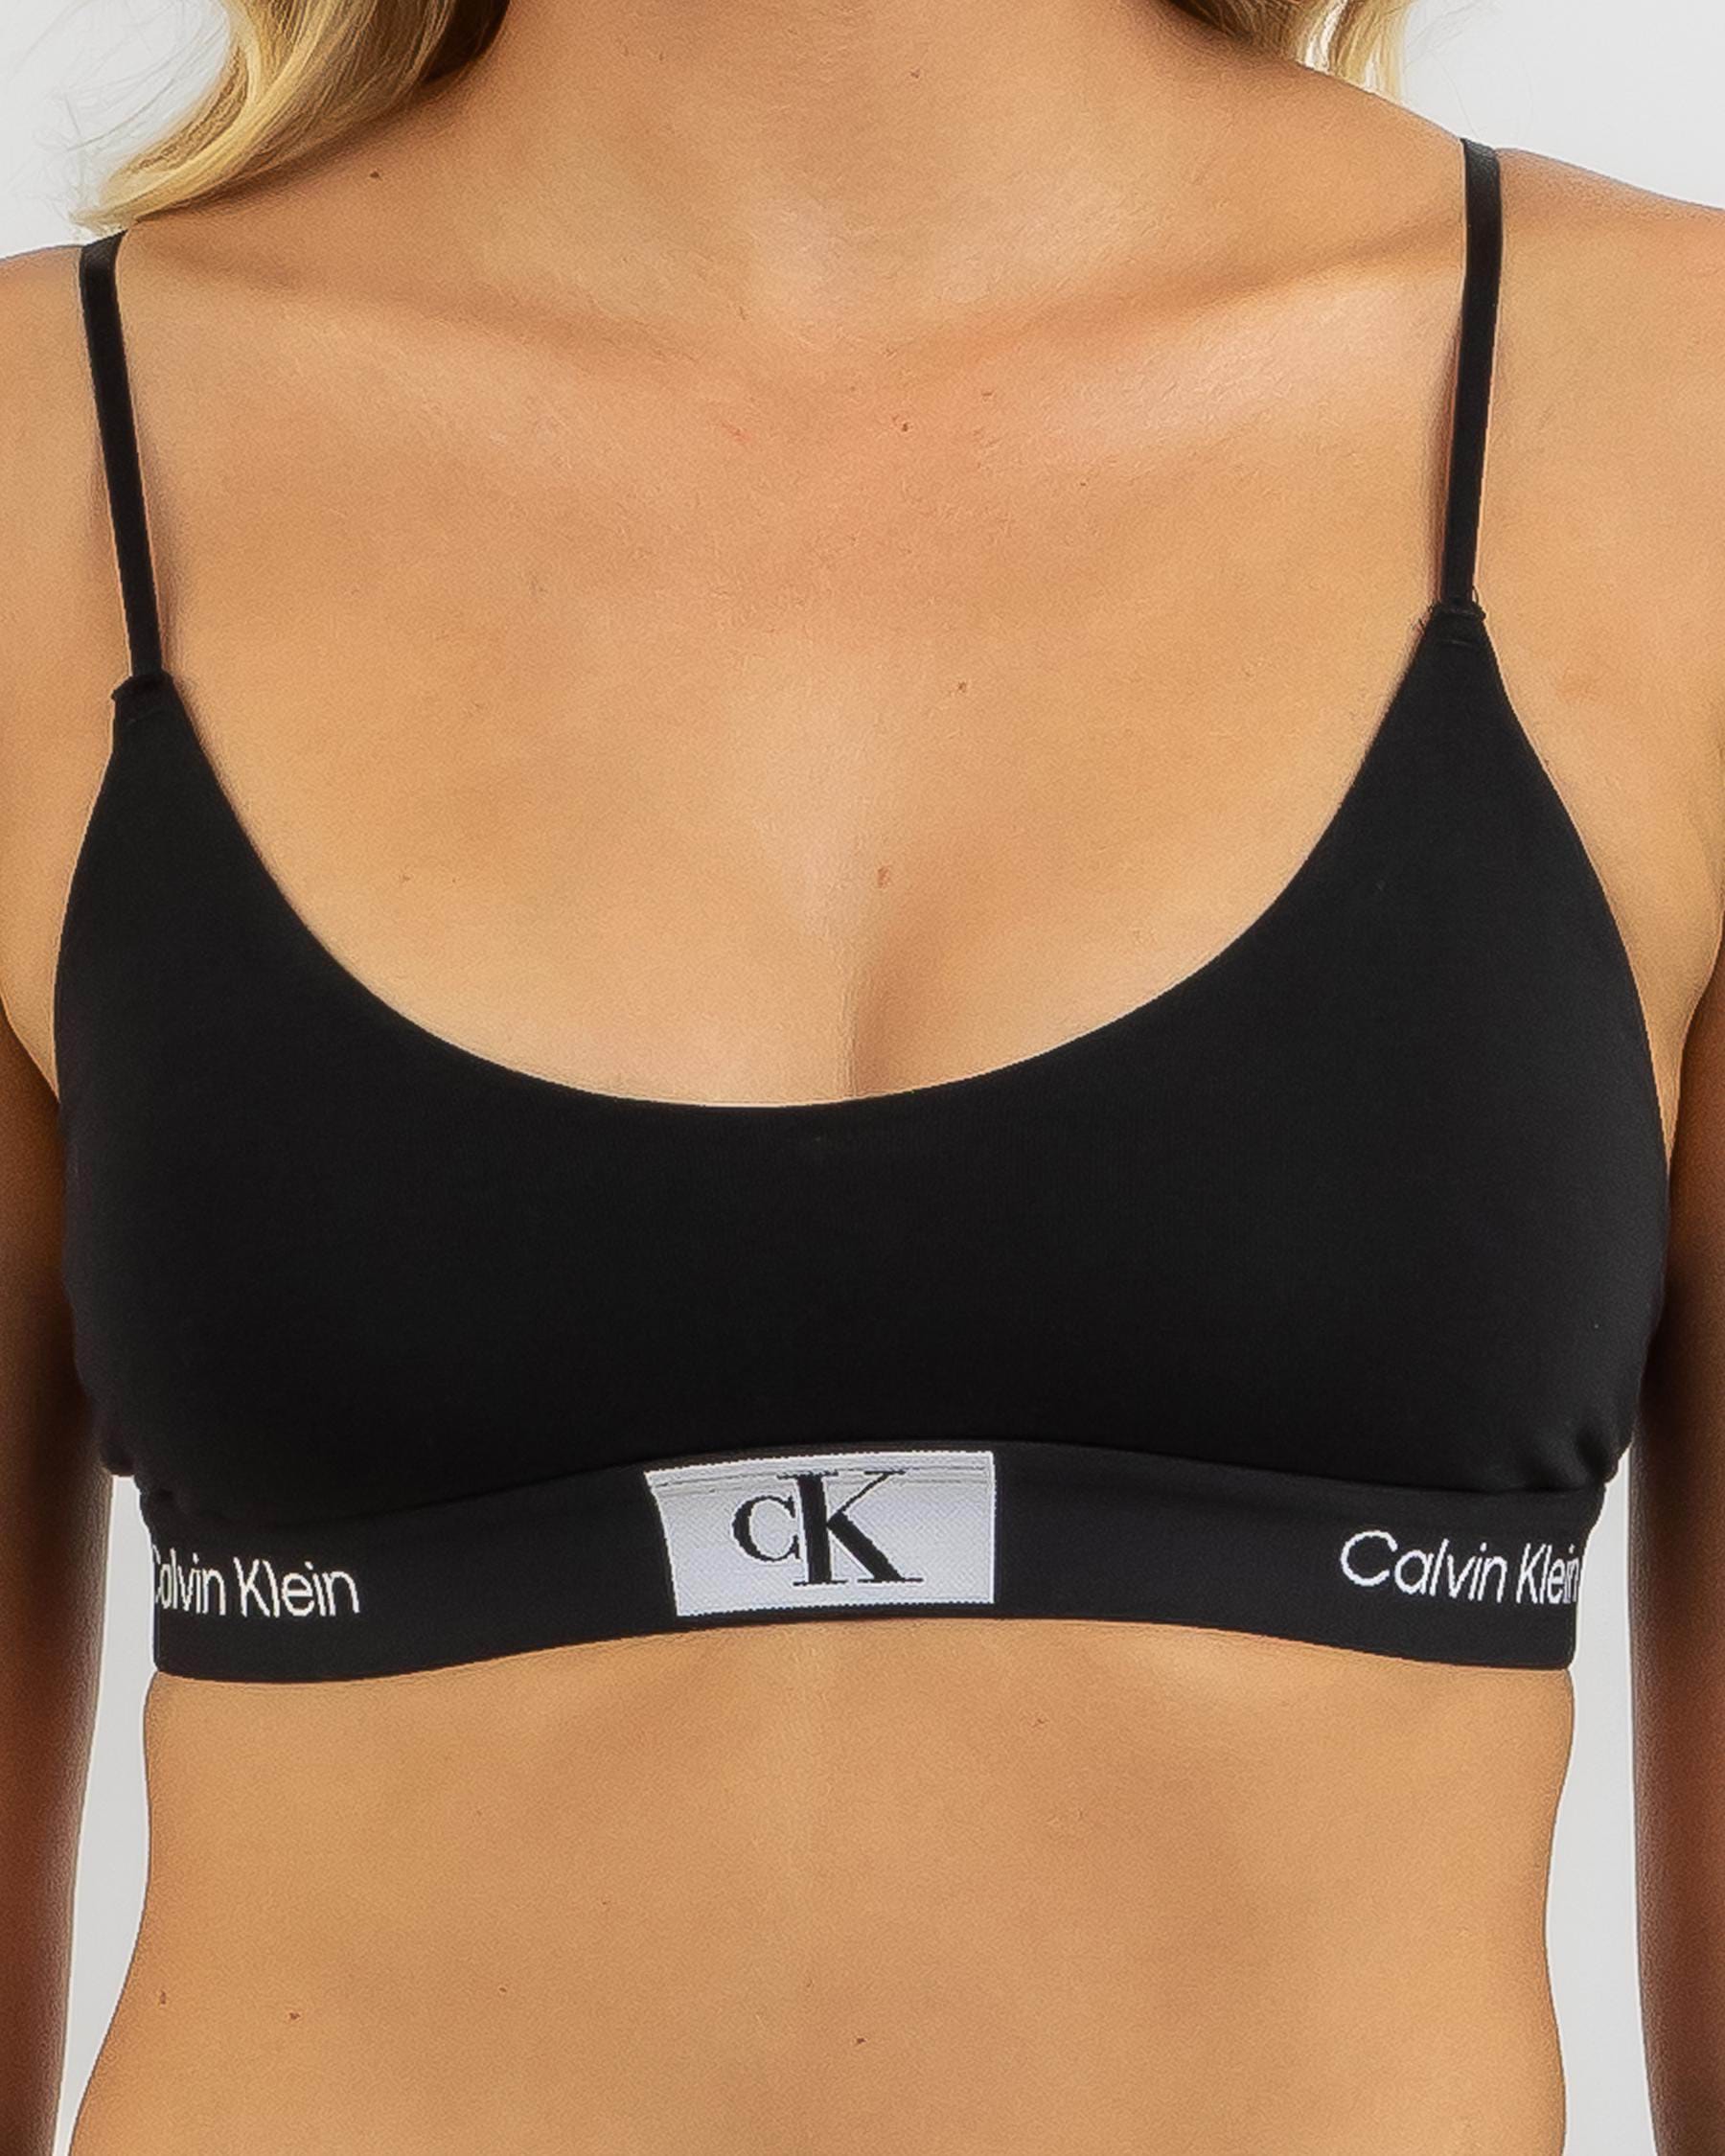 Calvin Klein CK 96 unlined bralette in black